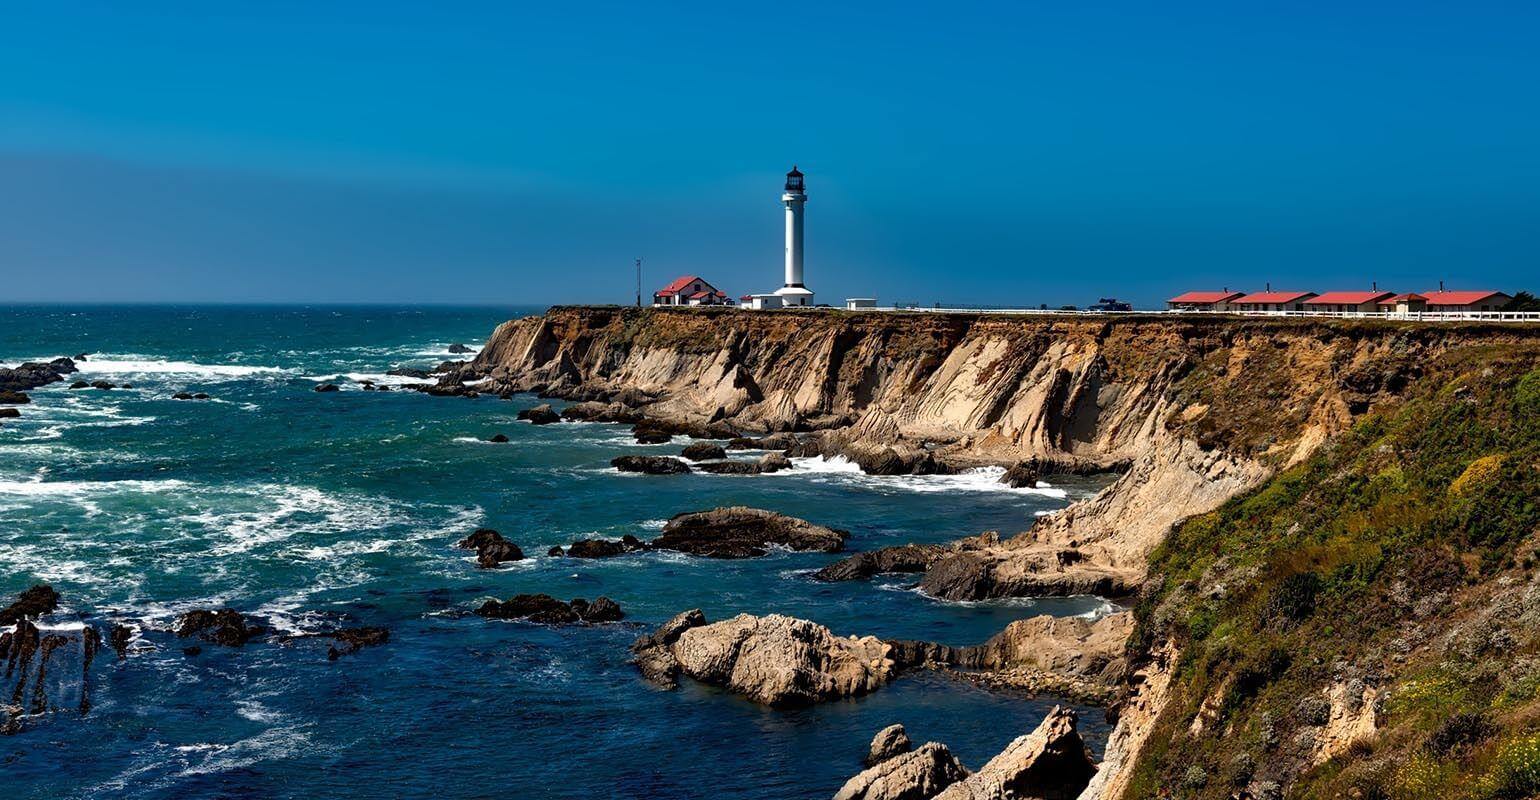 Fotorの無料オンライン画像鮮明化ツールによって鮮明さと細部が強化された海辺の灯台の風景画像